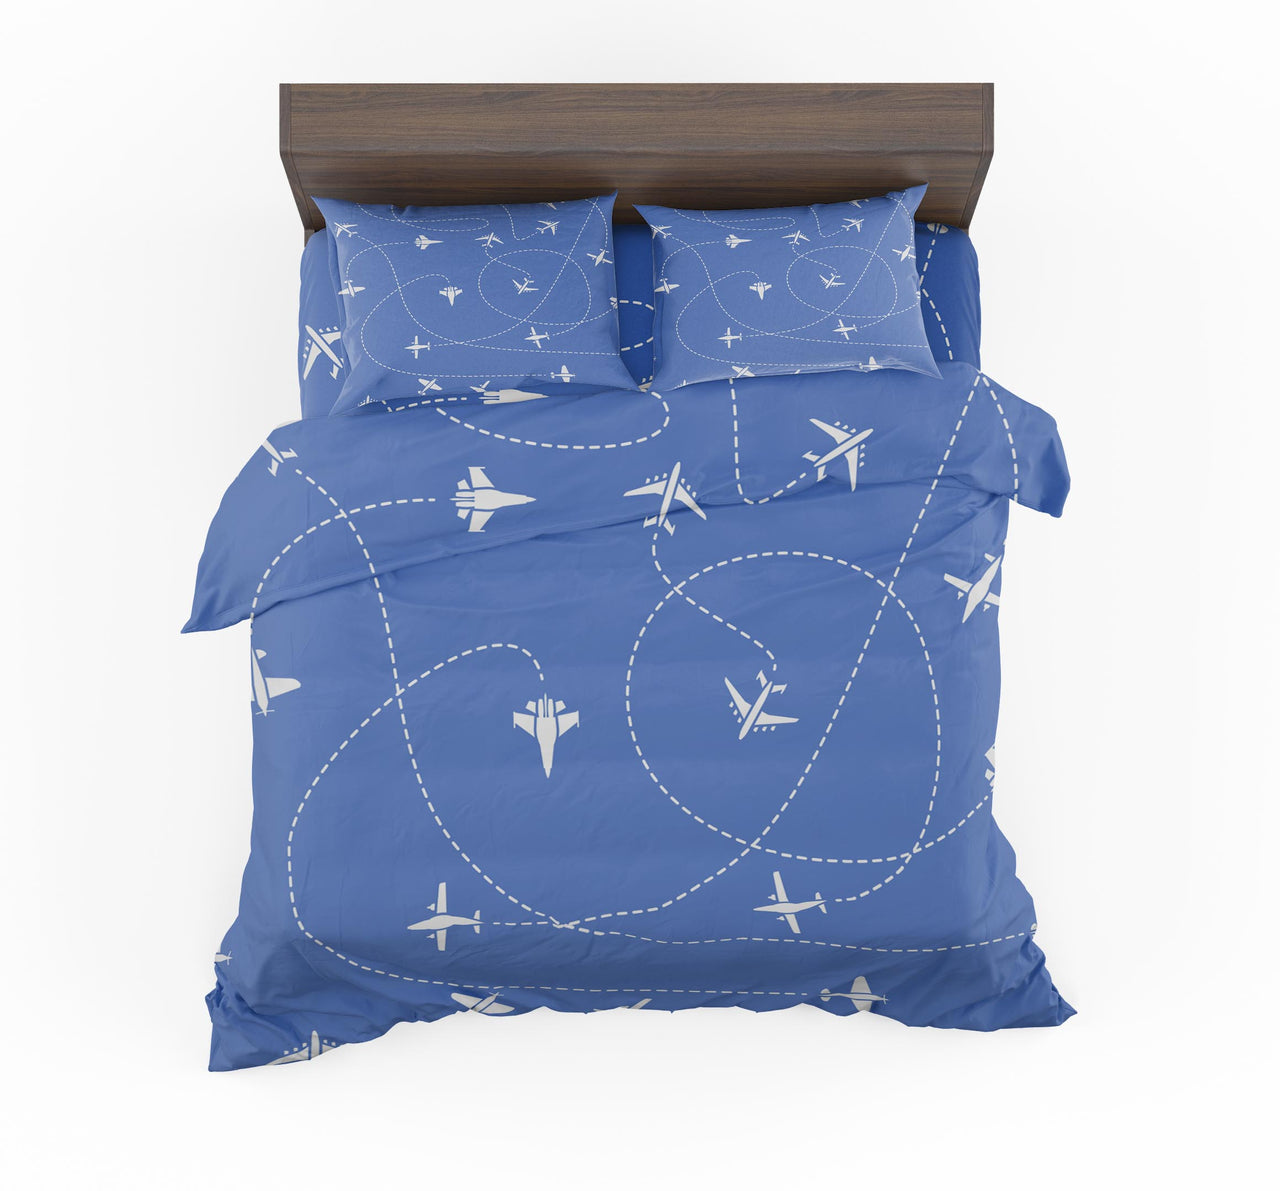 Travel The World By Plane (Blue) Designed Bedding Sets